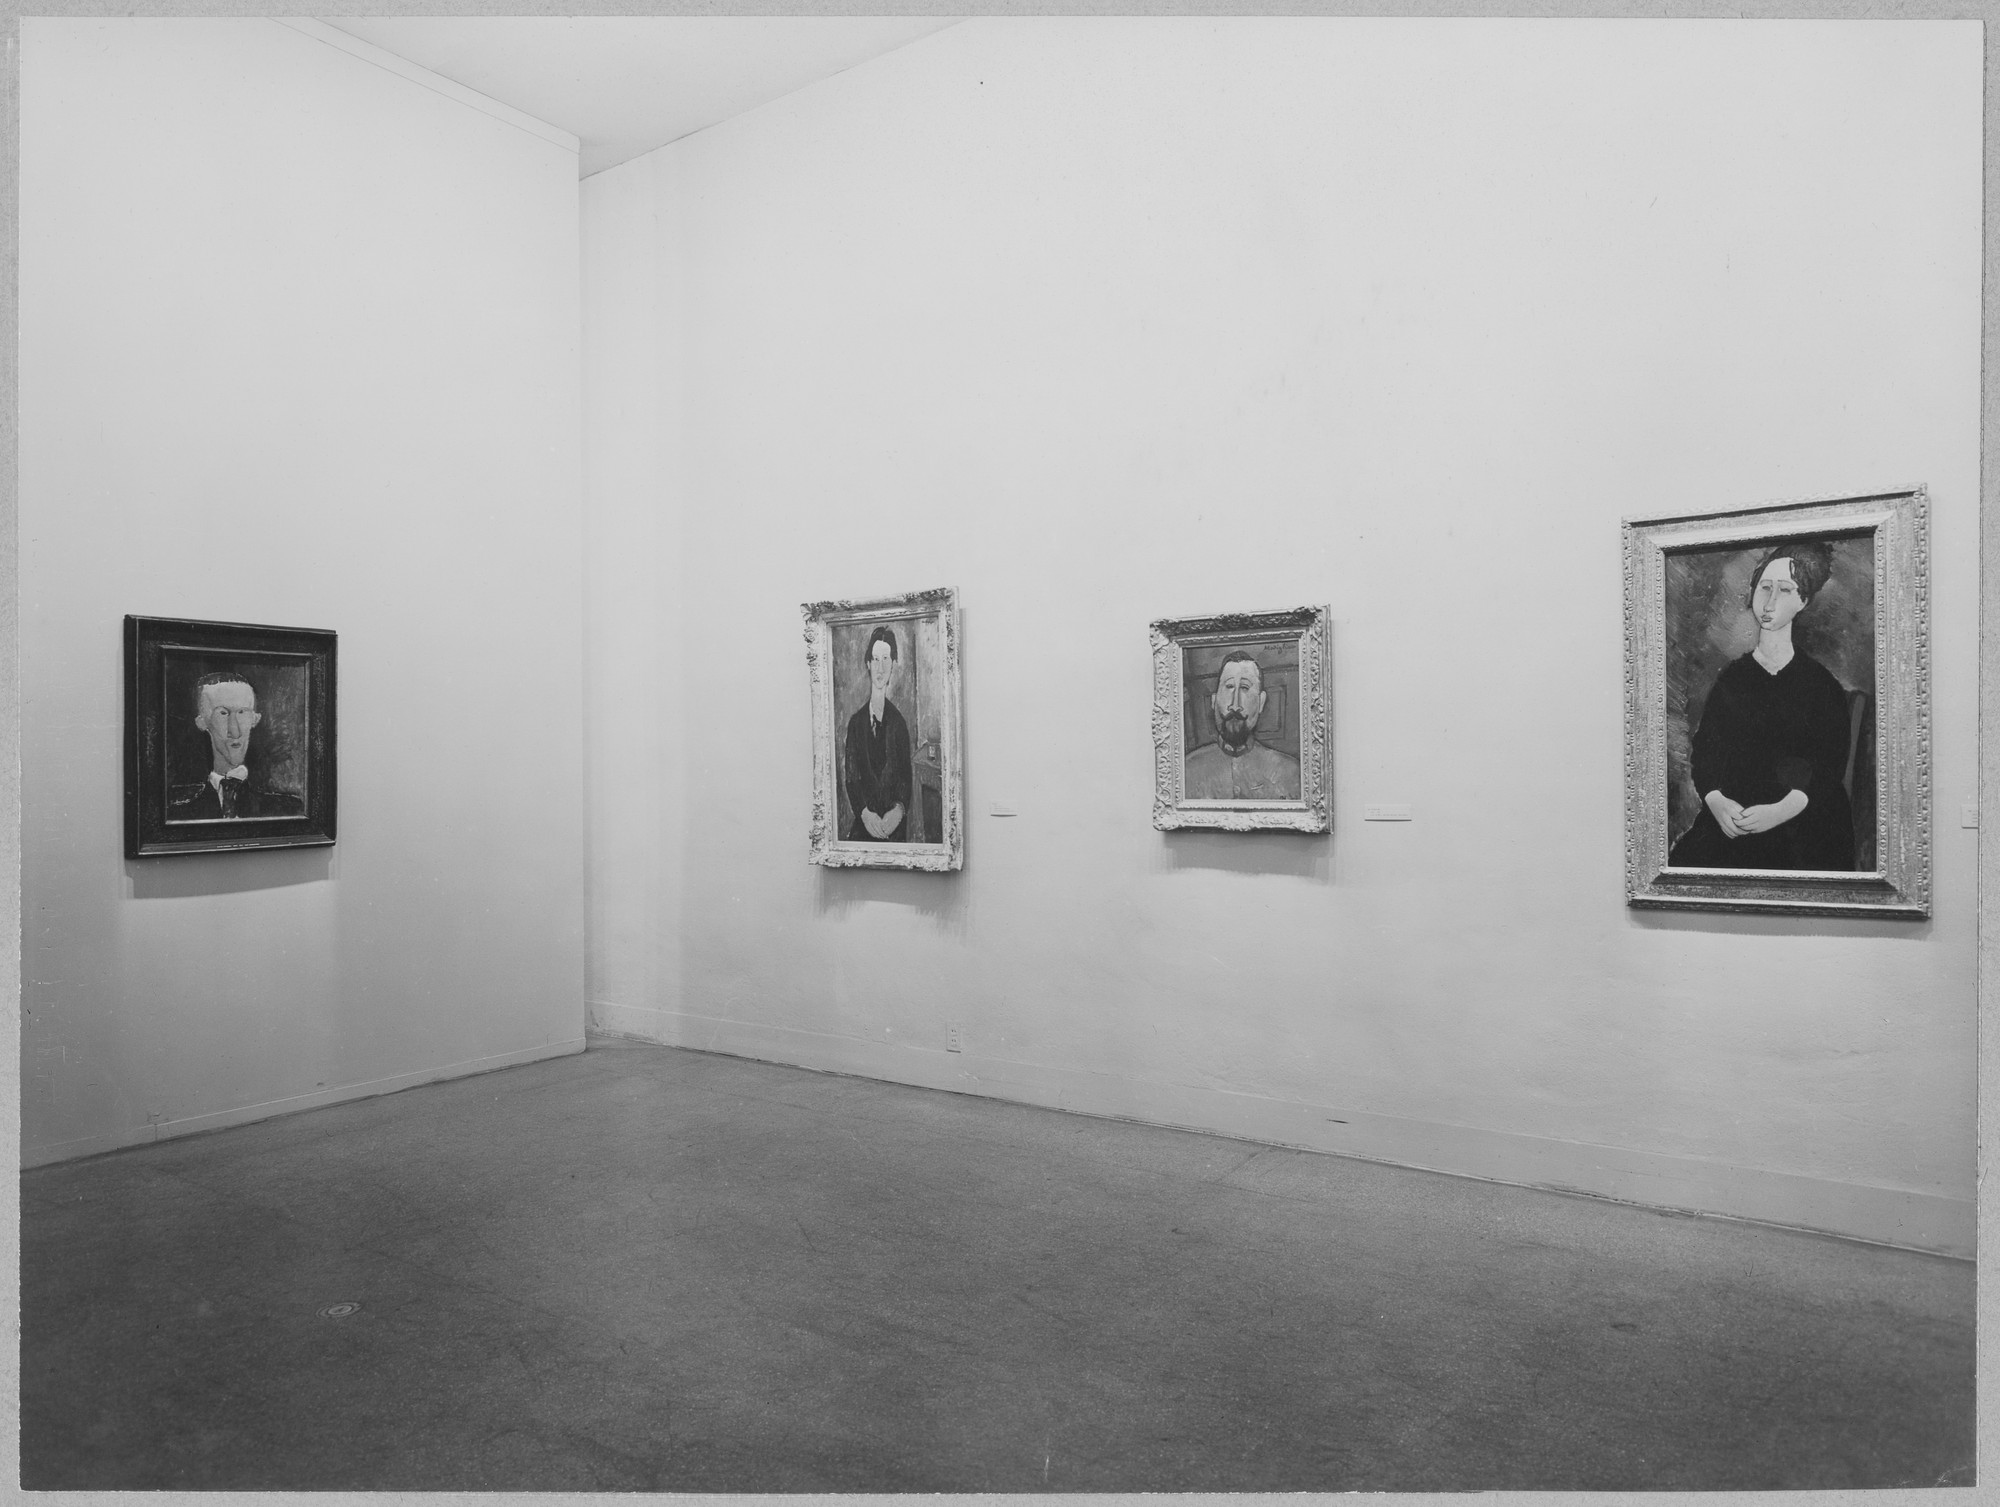 Installation view of the exhibition "Modigliani." MoMA